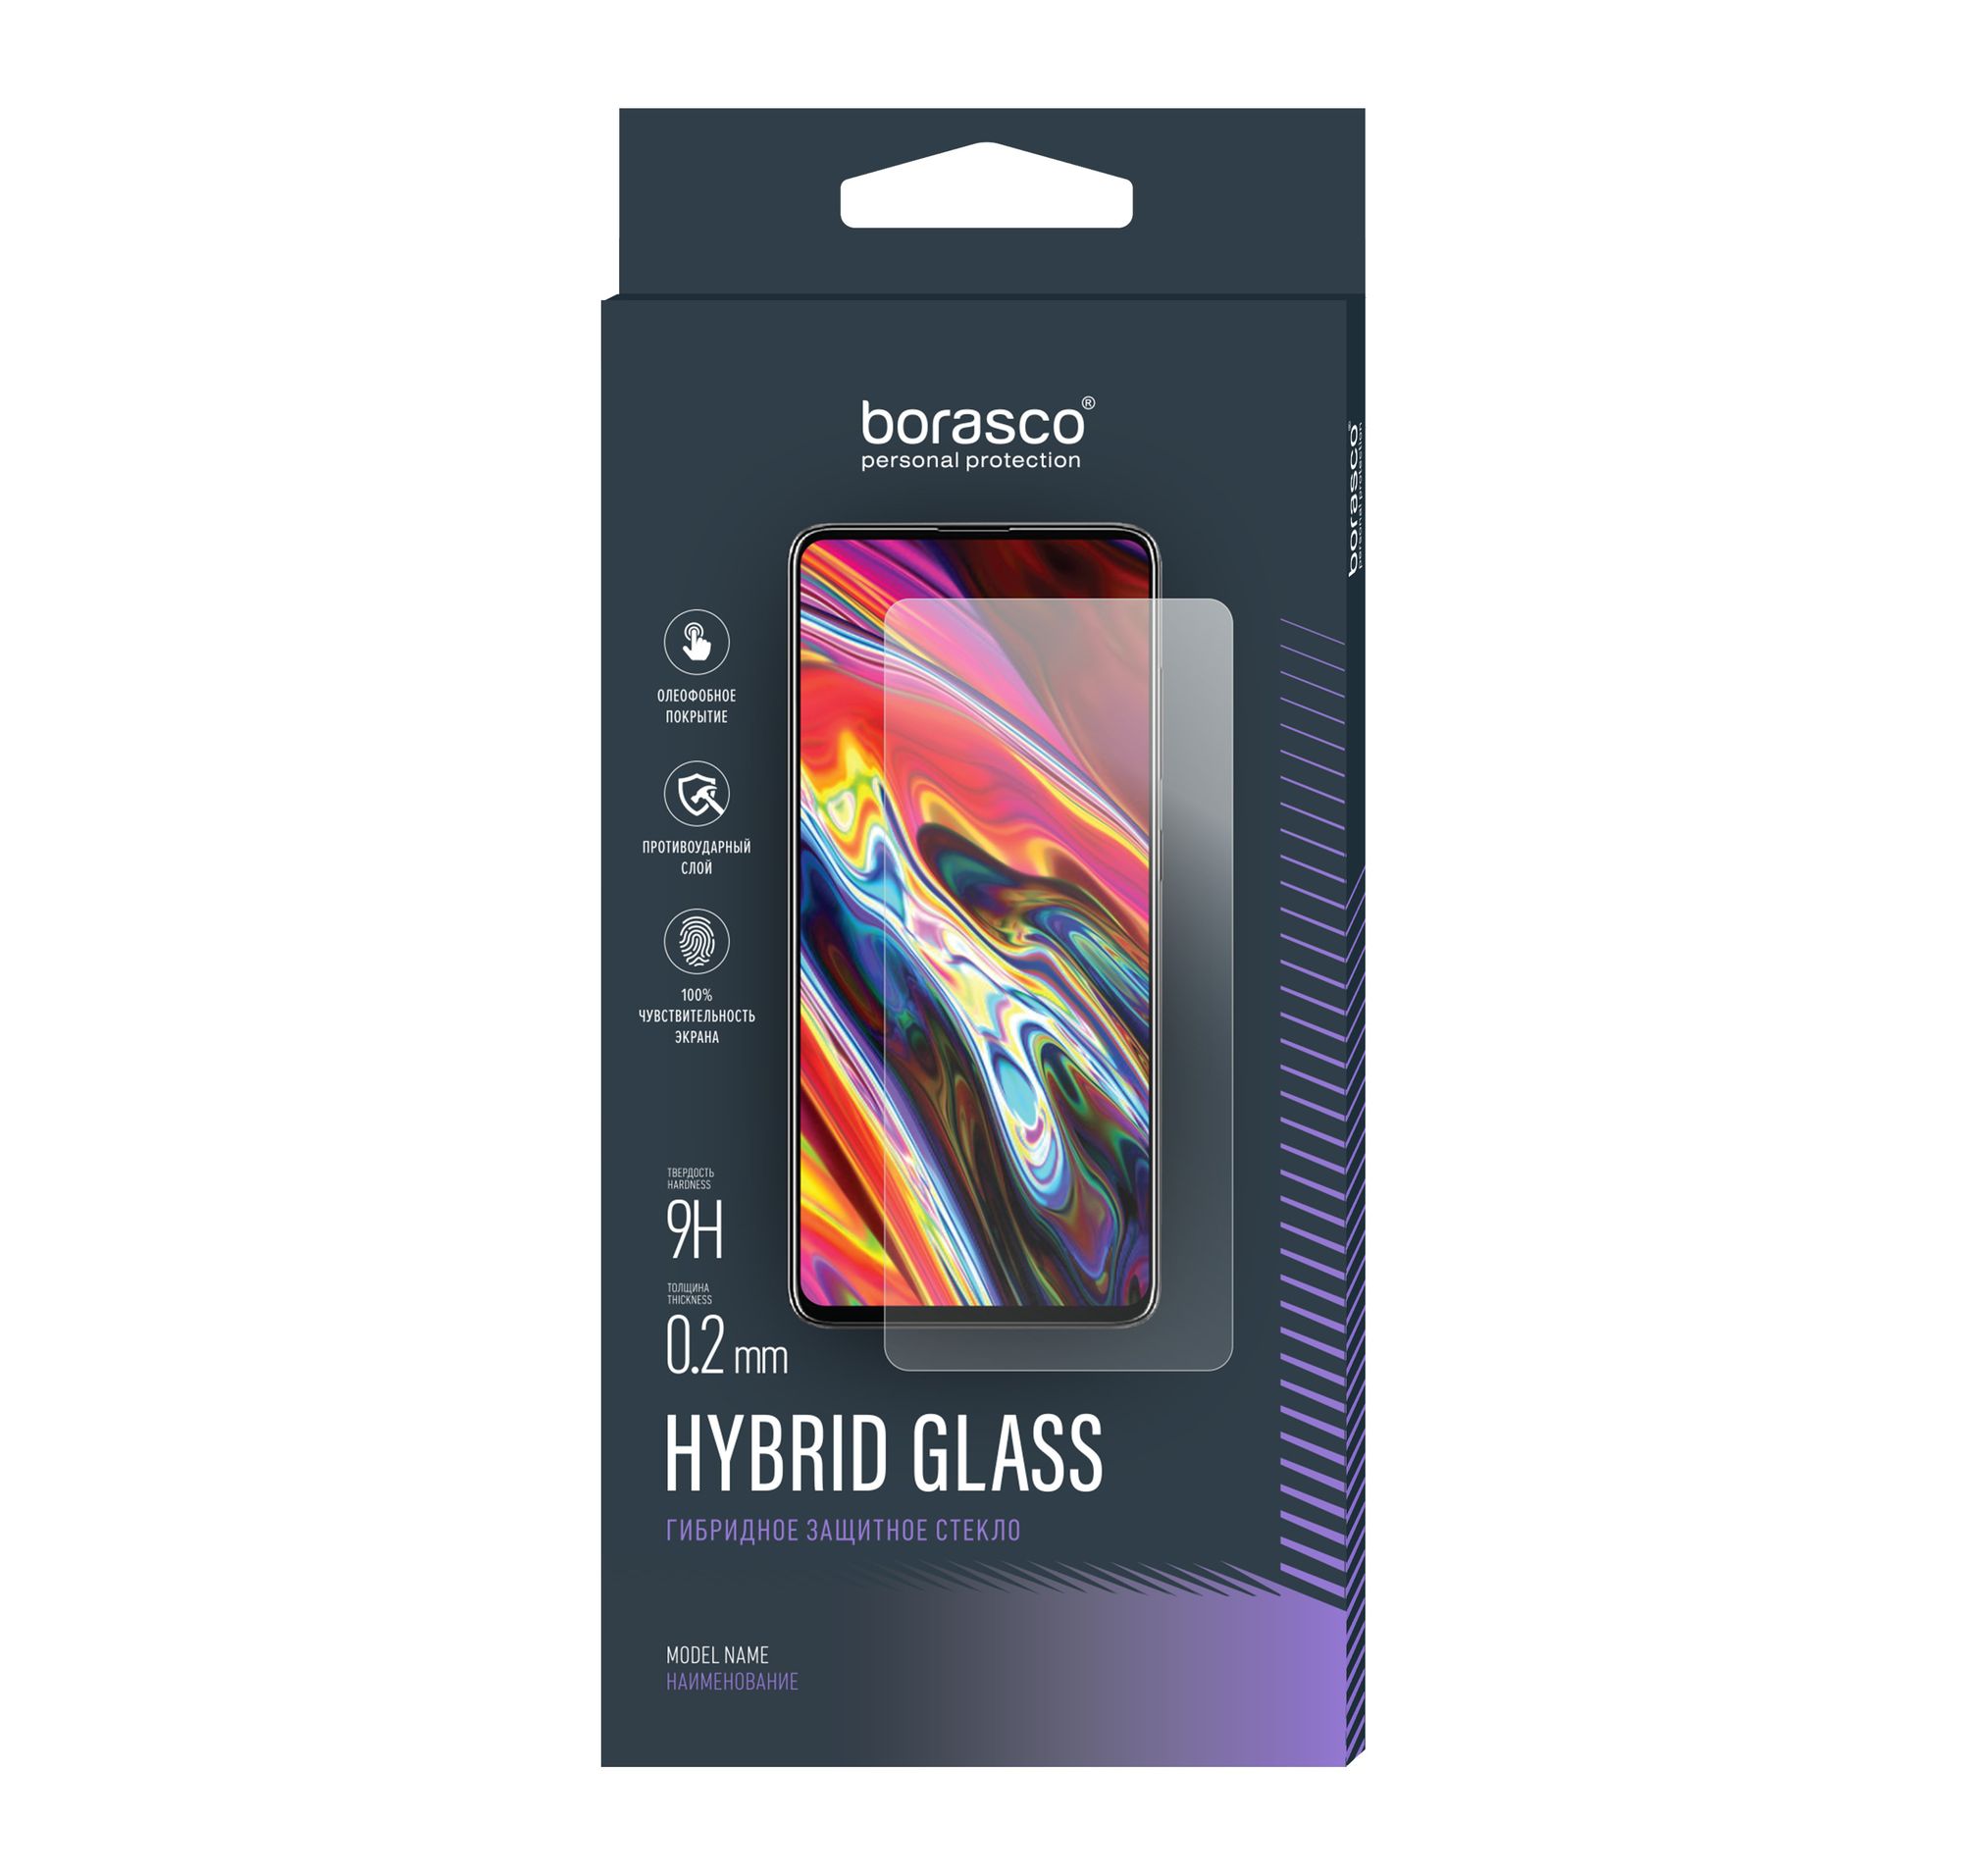 Стекло защитное Hybrid Glass VSP 0,26 мм для Huawei P30 защитное стекло для камеры hybrid glass для huawei p30 lite